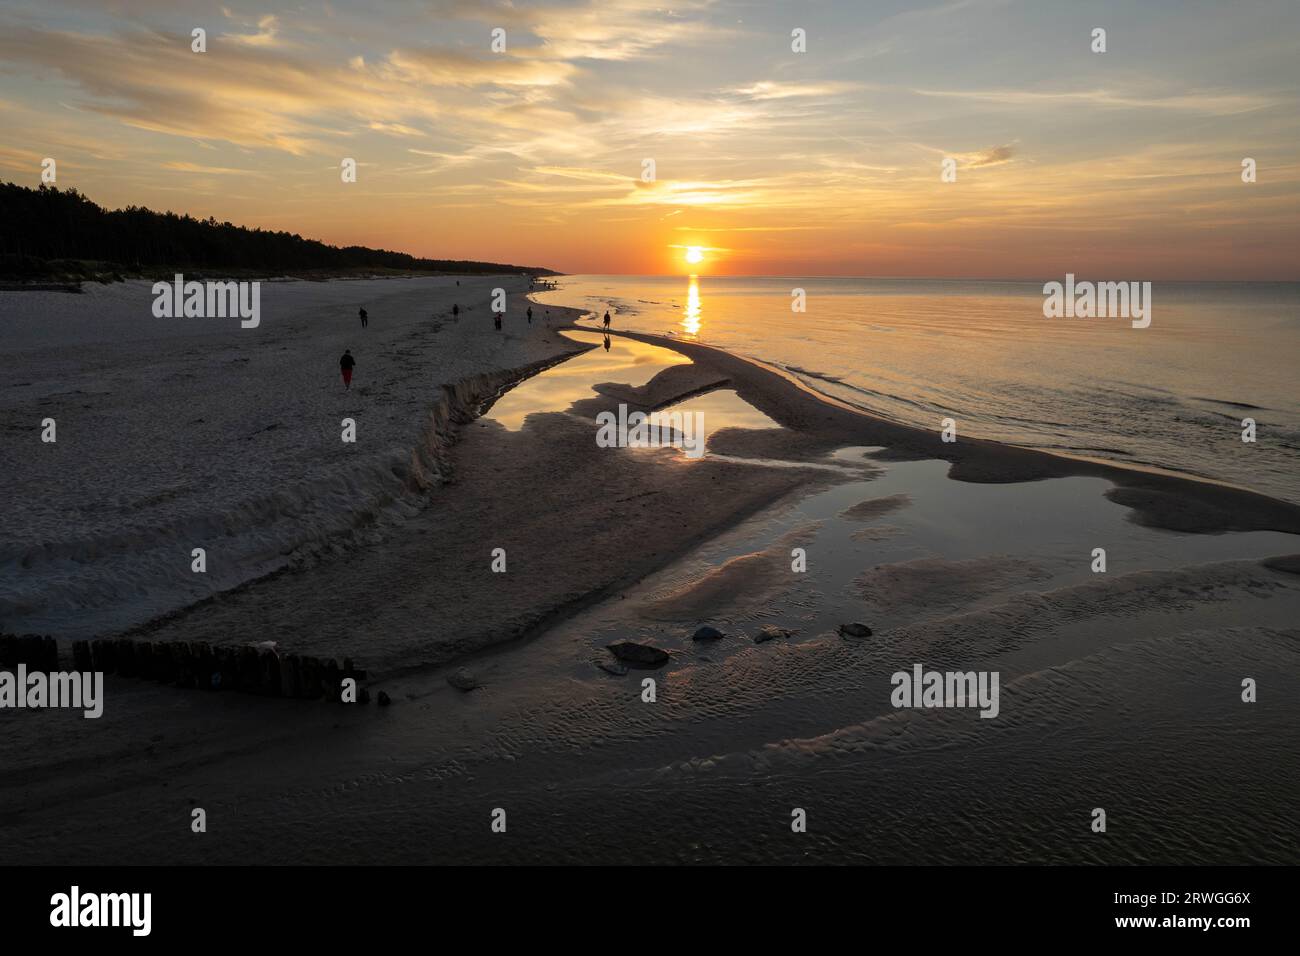 Drohnenaufnahme von einem Sonnenuntergang a Karwia, Kaschubien an der Ostsee a Polen. Polonia, Kaszuby, foto dei droni, Vista aerea, Mar polacco Foto Stock